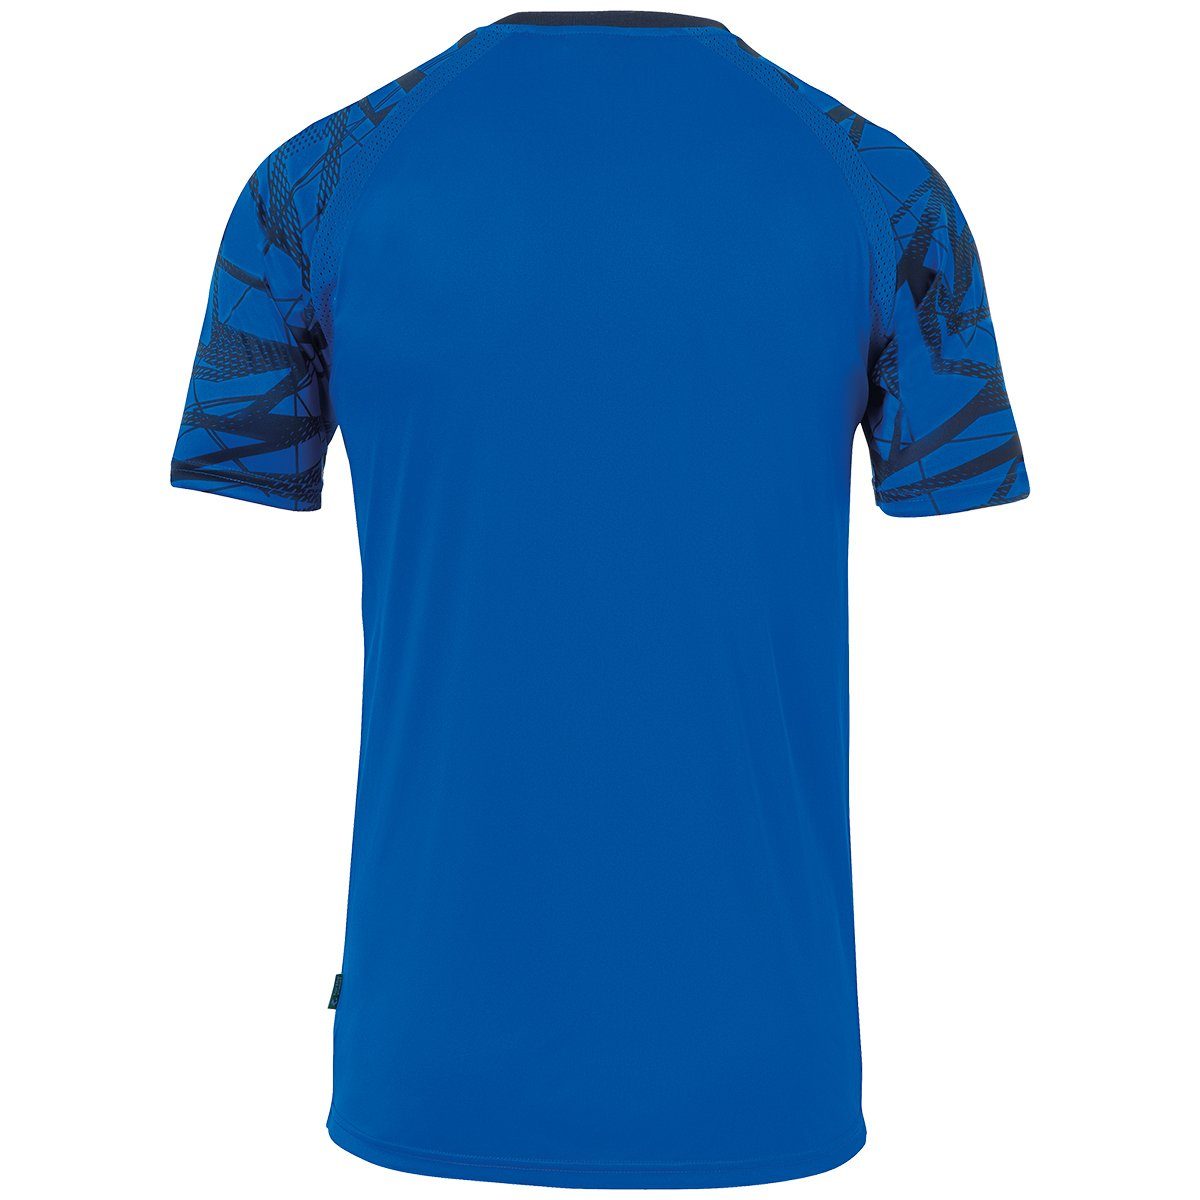 KURZARM azurblau/marine 25 uhlsport Trainingsshirt atmungsaktiv TRIKOT GOAL Trainings-T-Shirt uhlsport